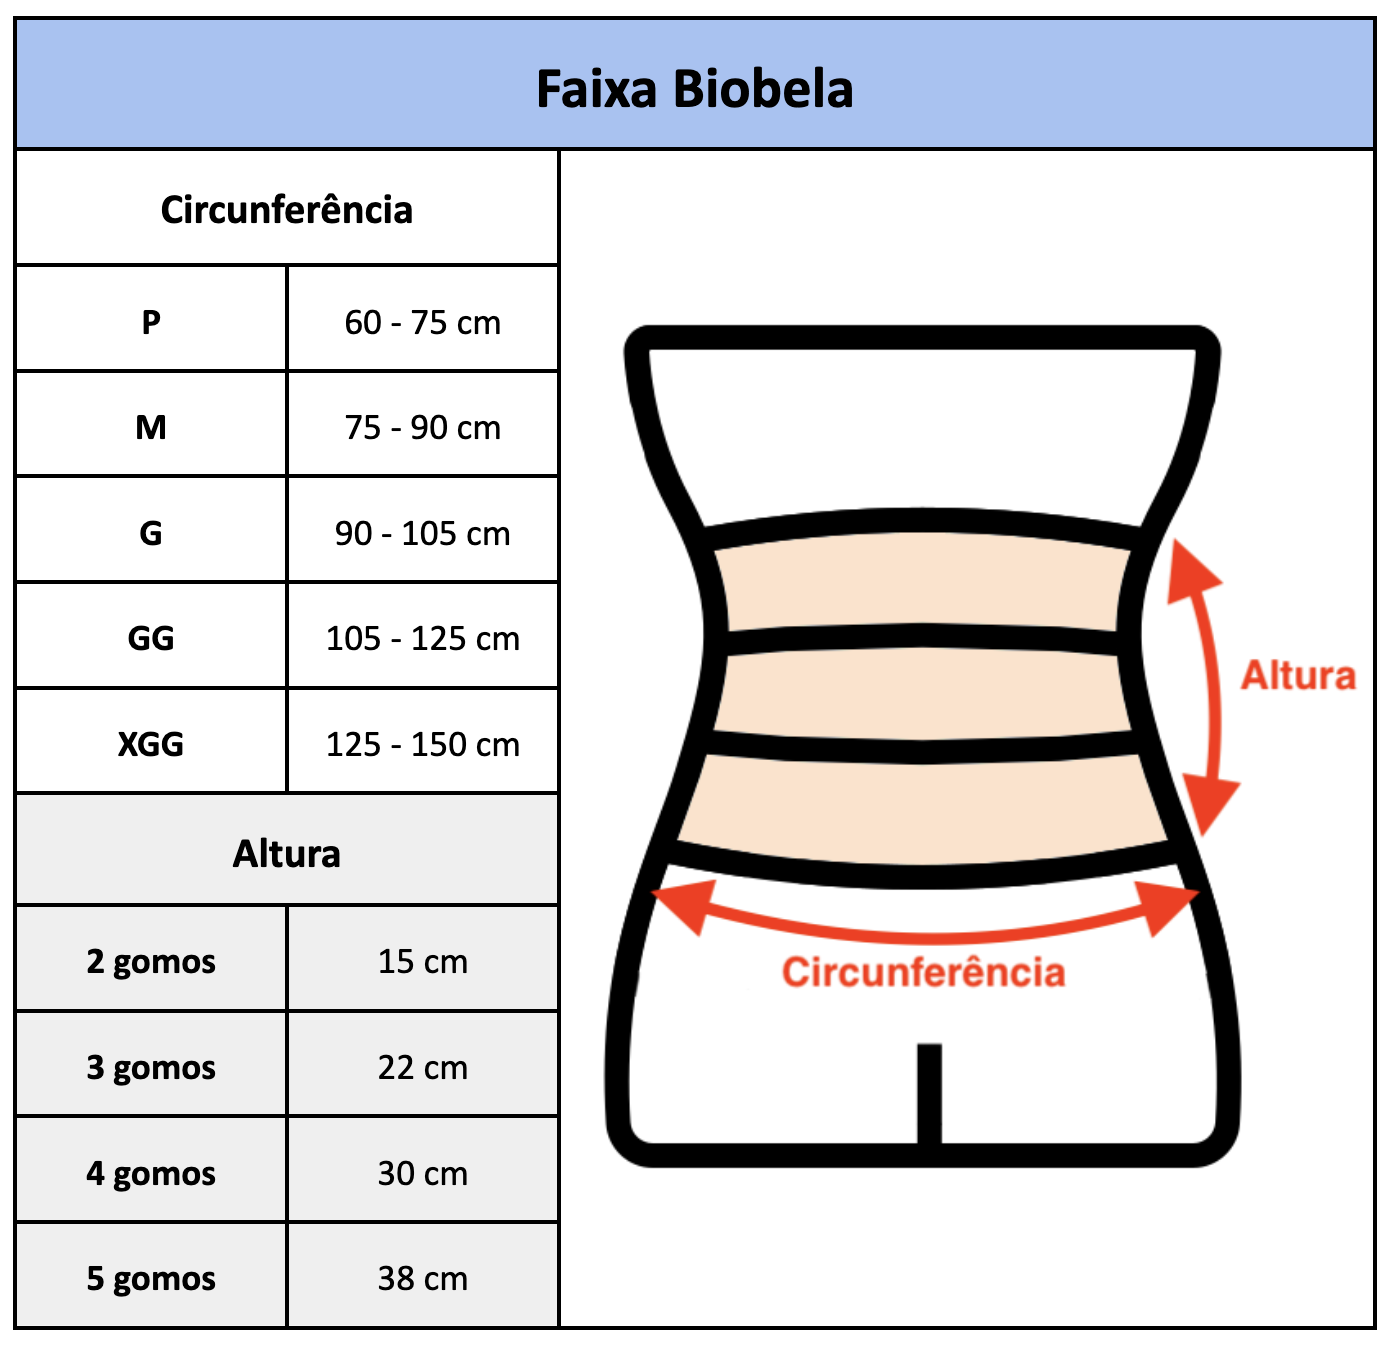 Faixa abdominal elástica compressiva de 3 gomos Biobela 1625G3 estética e pós cirúrg. bariátrica abdominoplastia hérnia  - Cinta se Nova